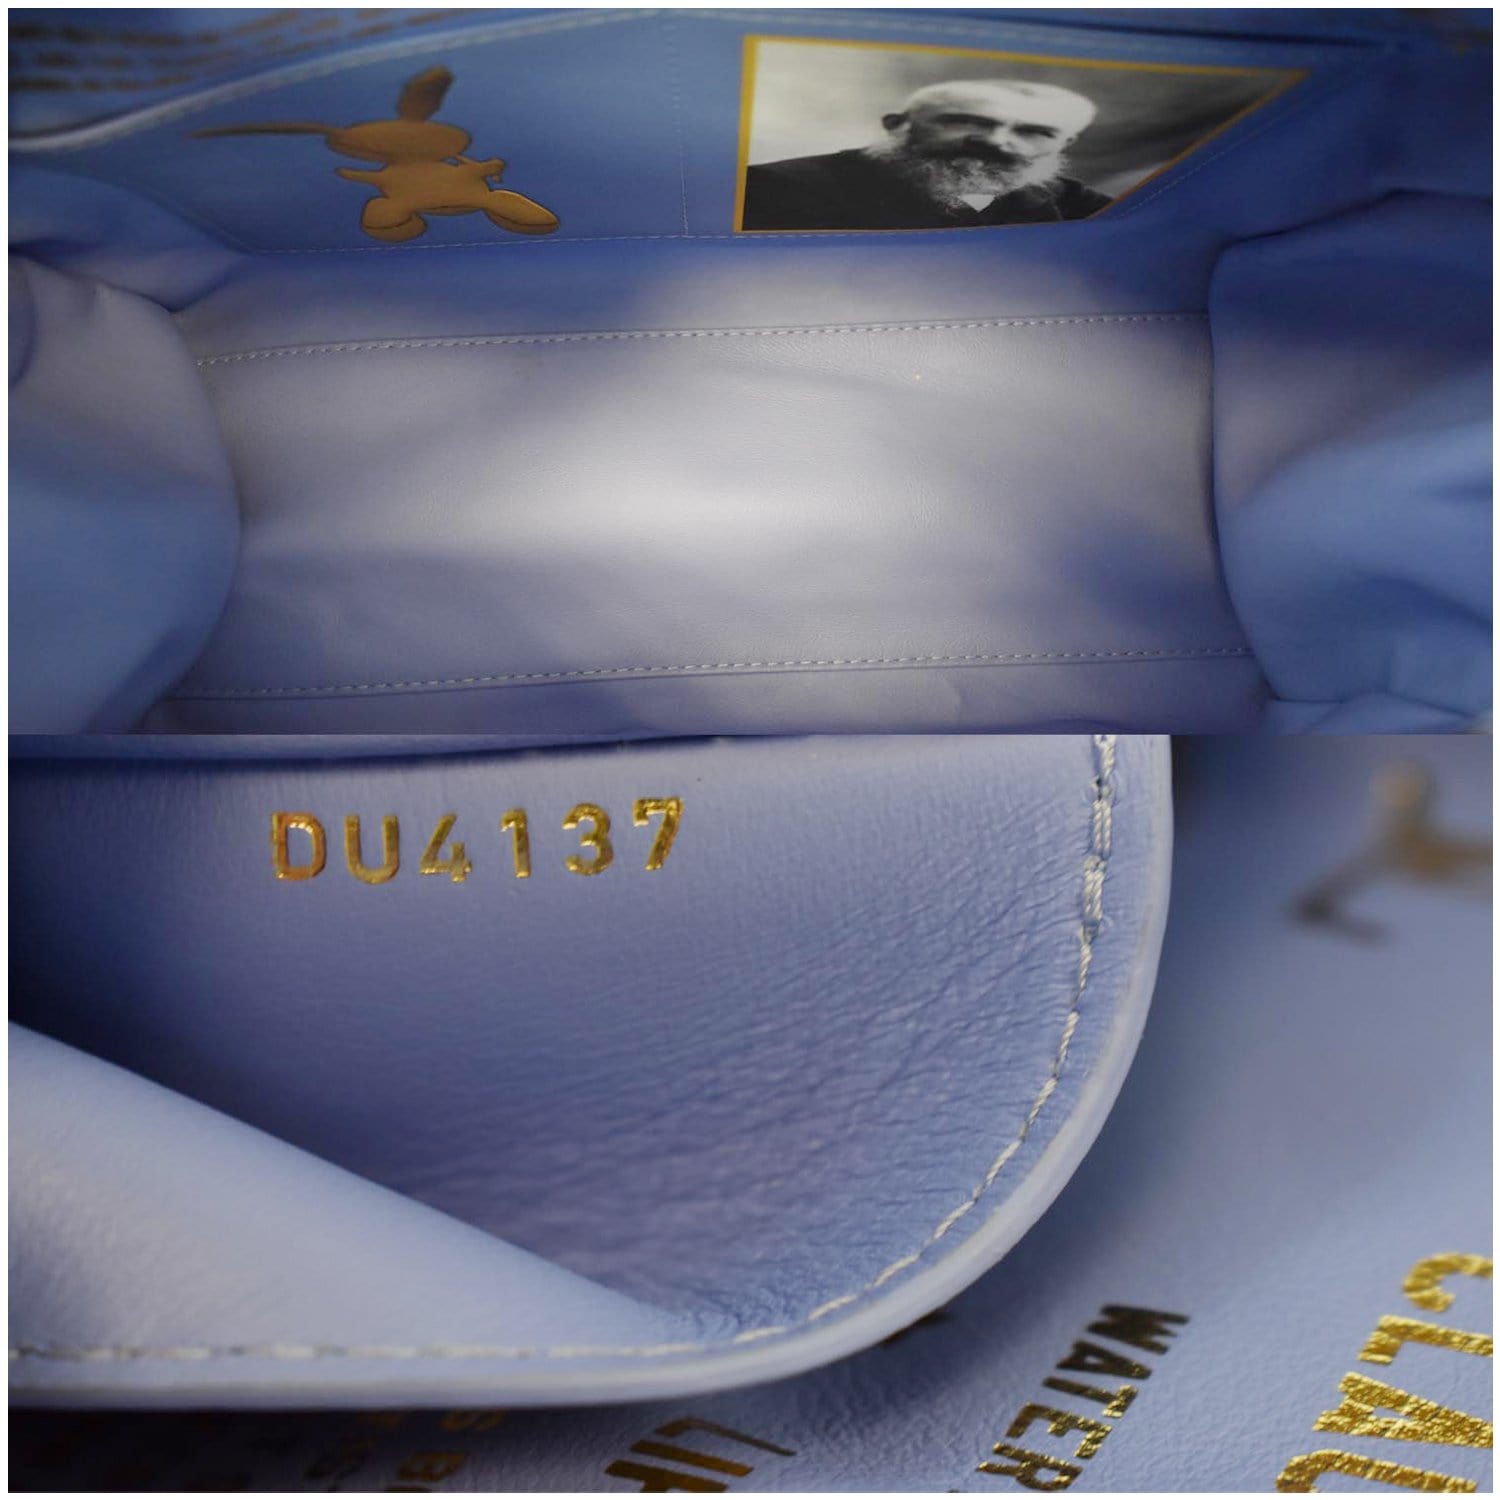 LOUIS VUITTON monet speedy 30 Handbag M43354 Masters canvas Blue Used Women  LV